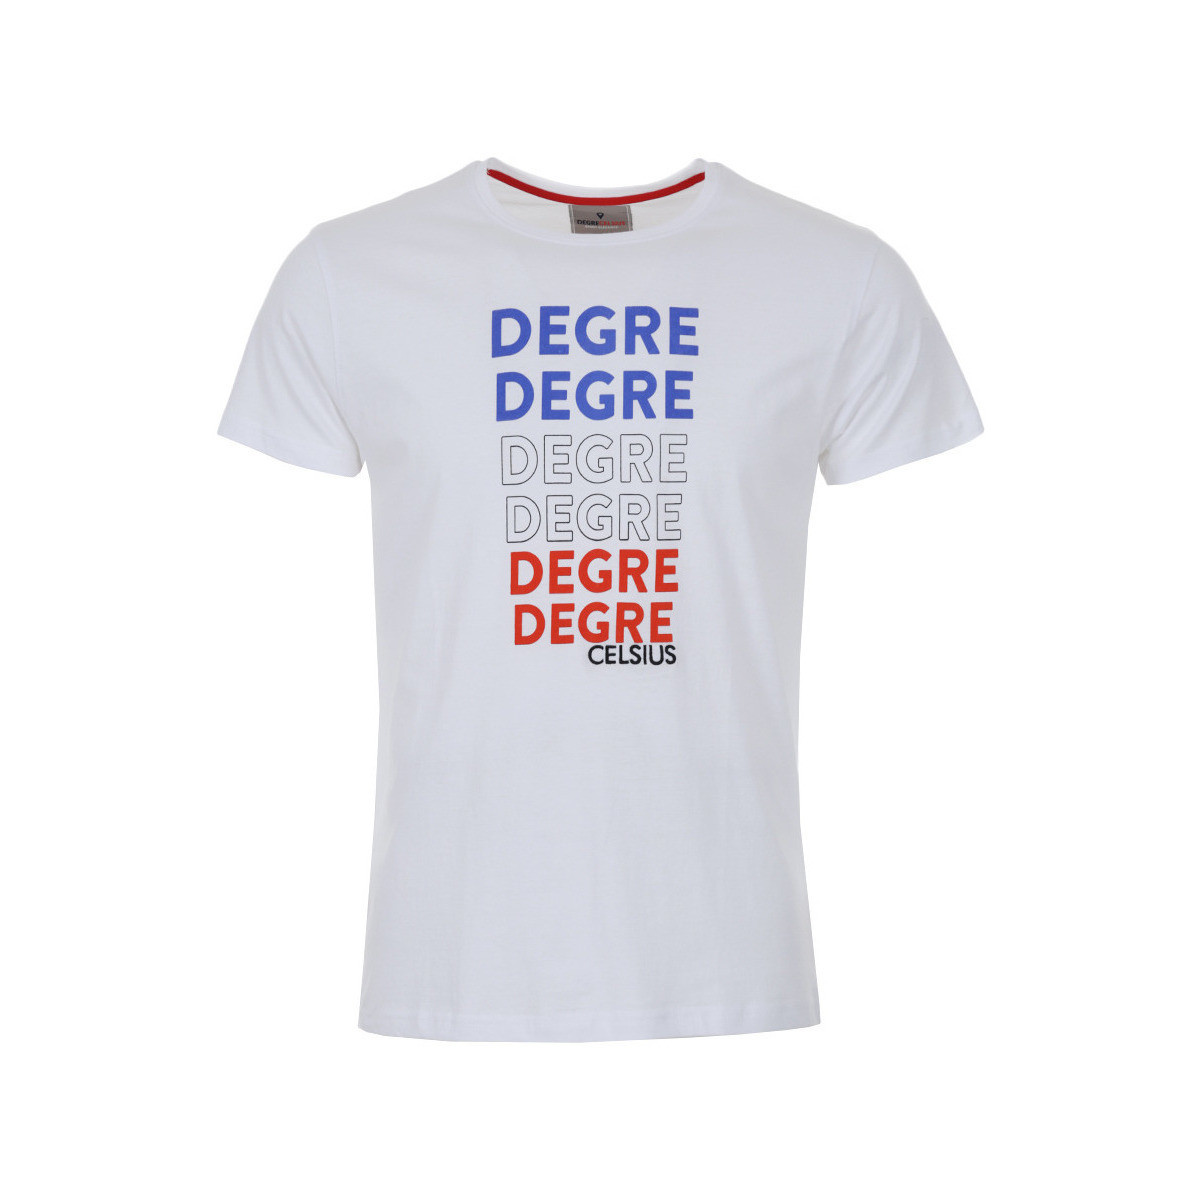 Textil Muži Trička s krátkým rukávem Degré Celsius T-shirt manches courtes homme CEGRADE Bílá